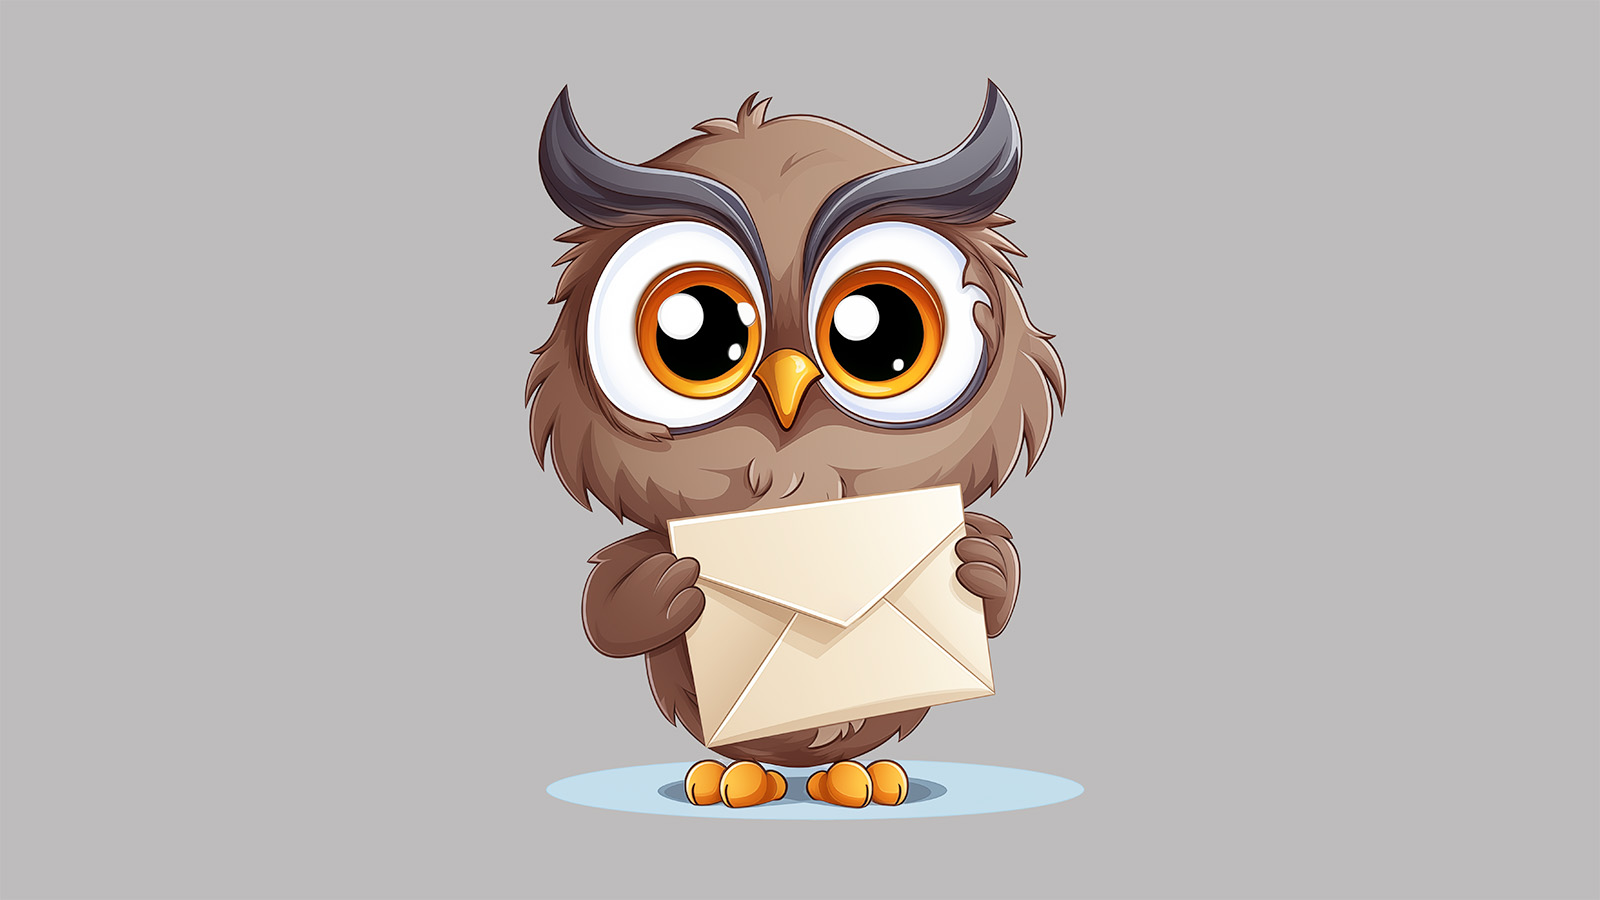 A cartoon owl holding a letter